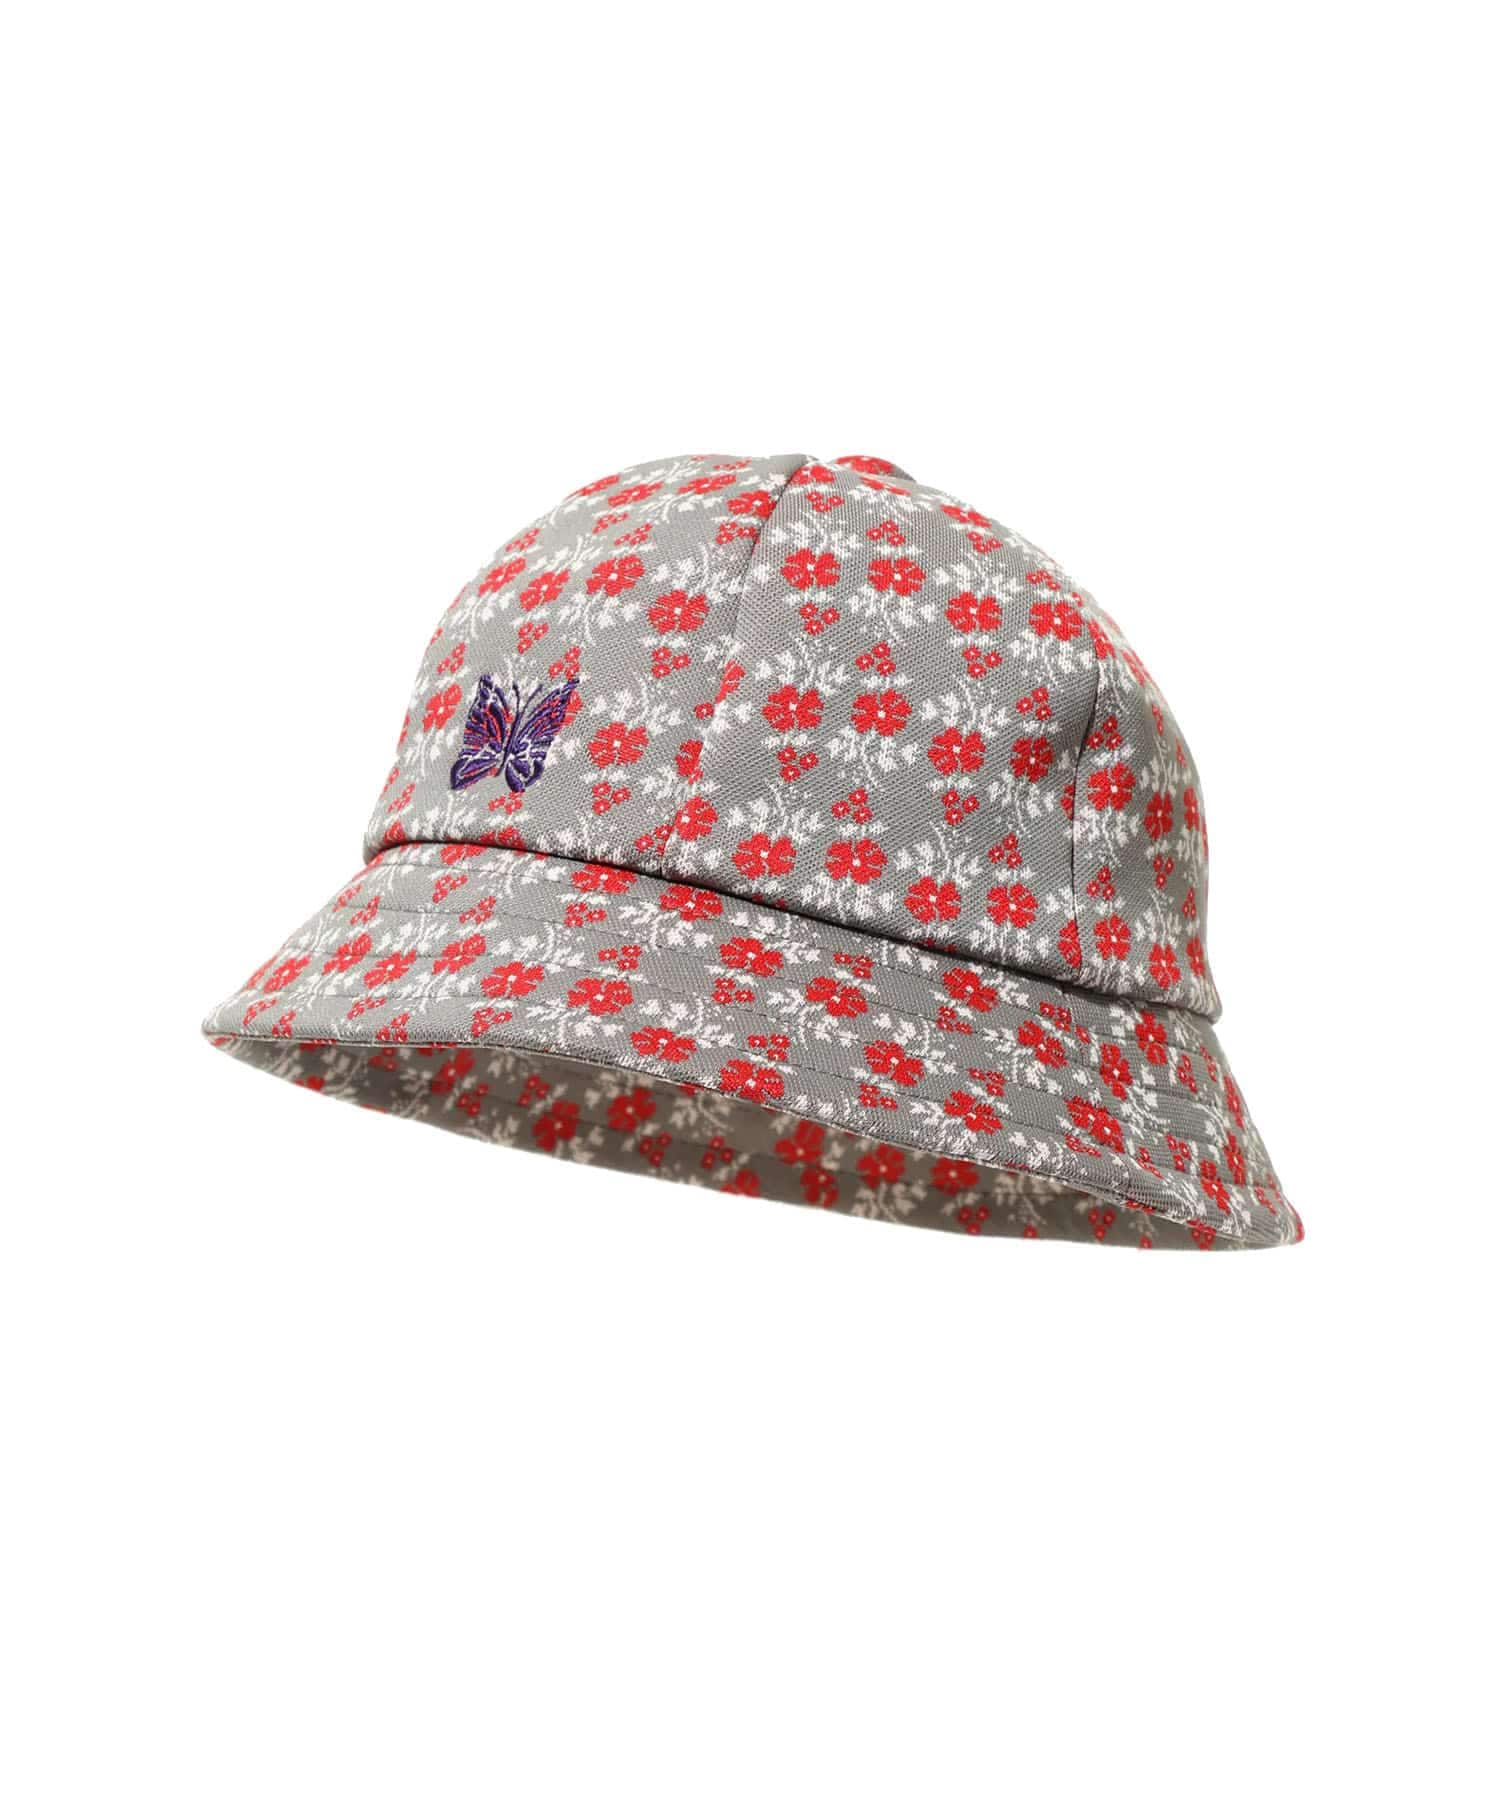 Bermuda Hat - Poly Jq｜NEEDLES